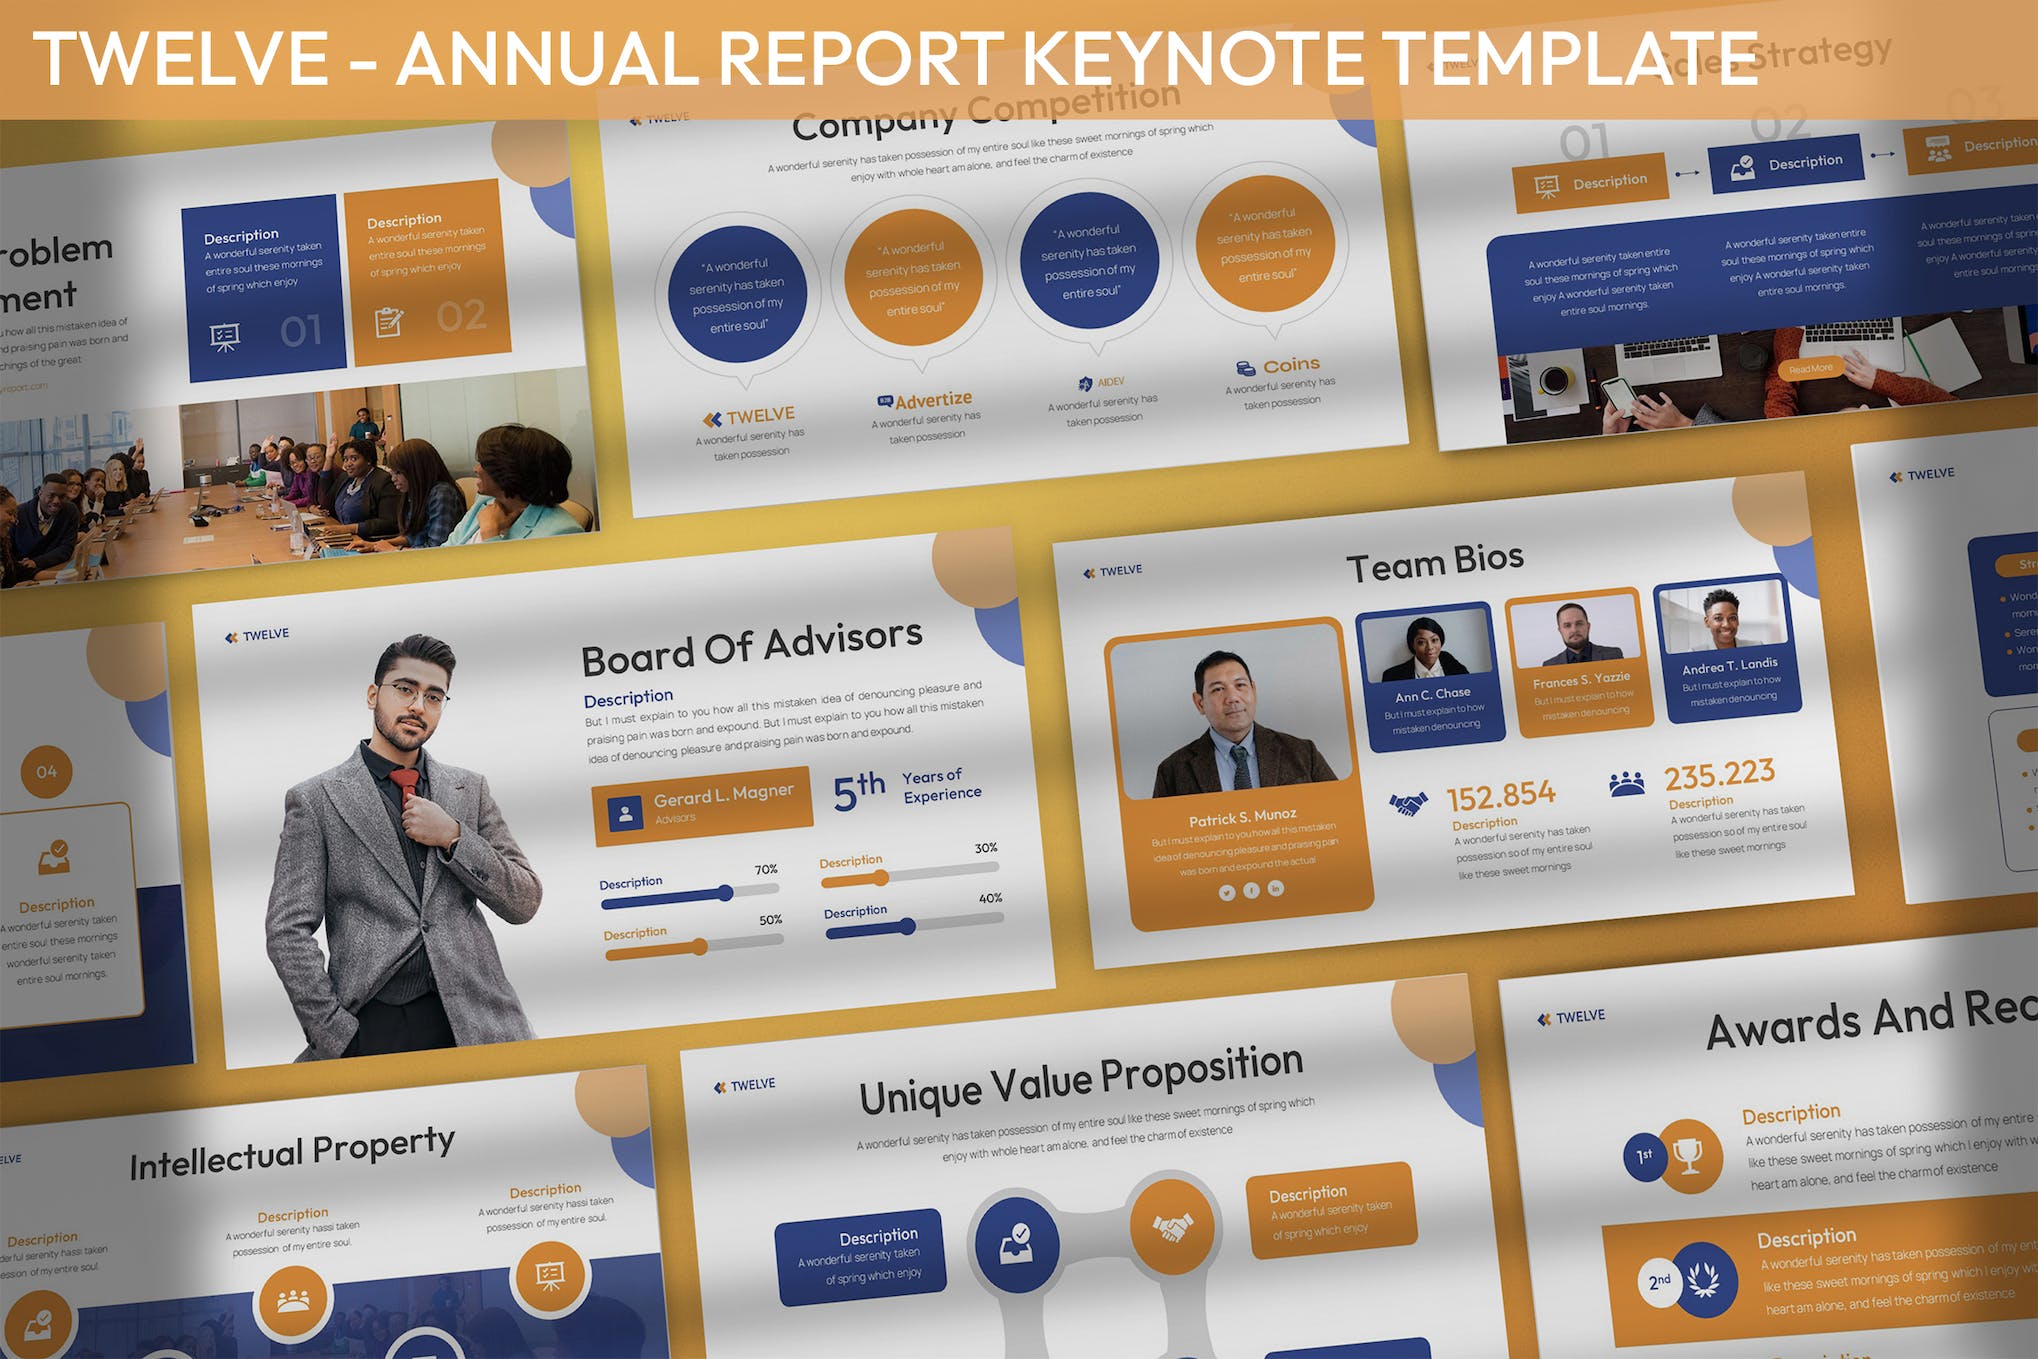 Twelve - Annual Report Keynote Template